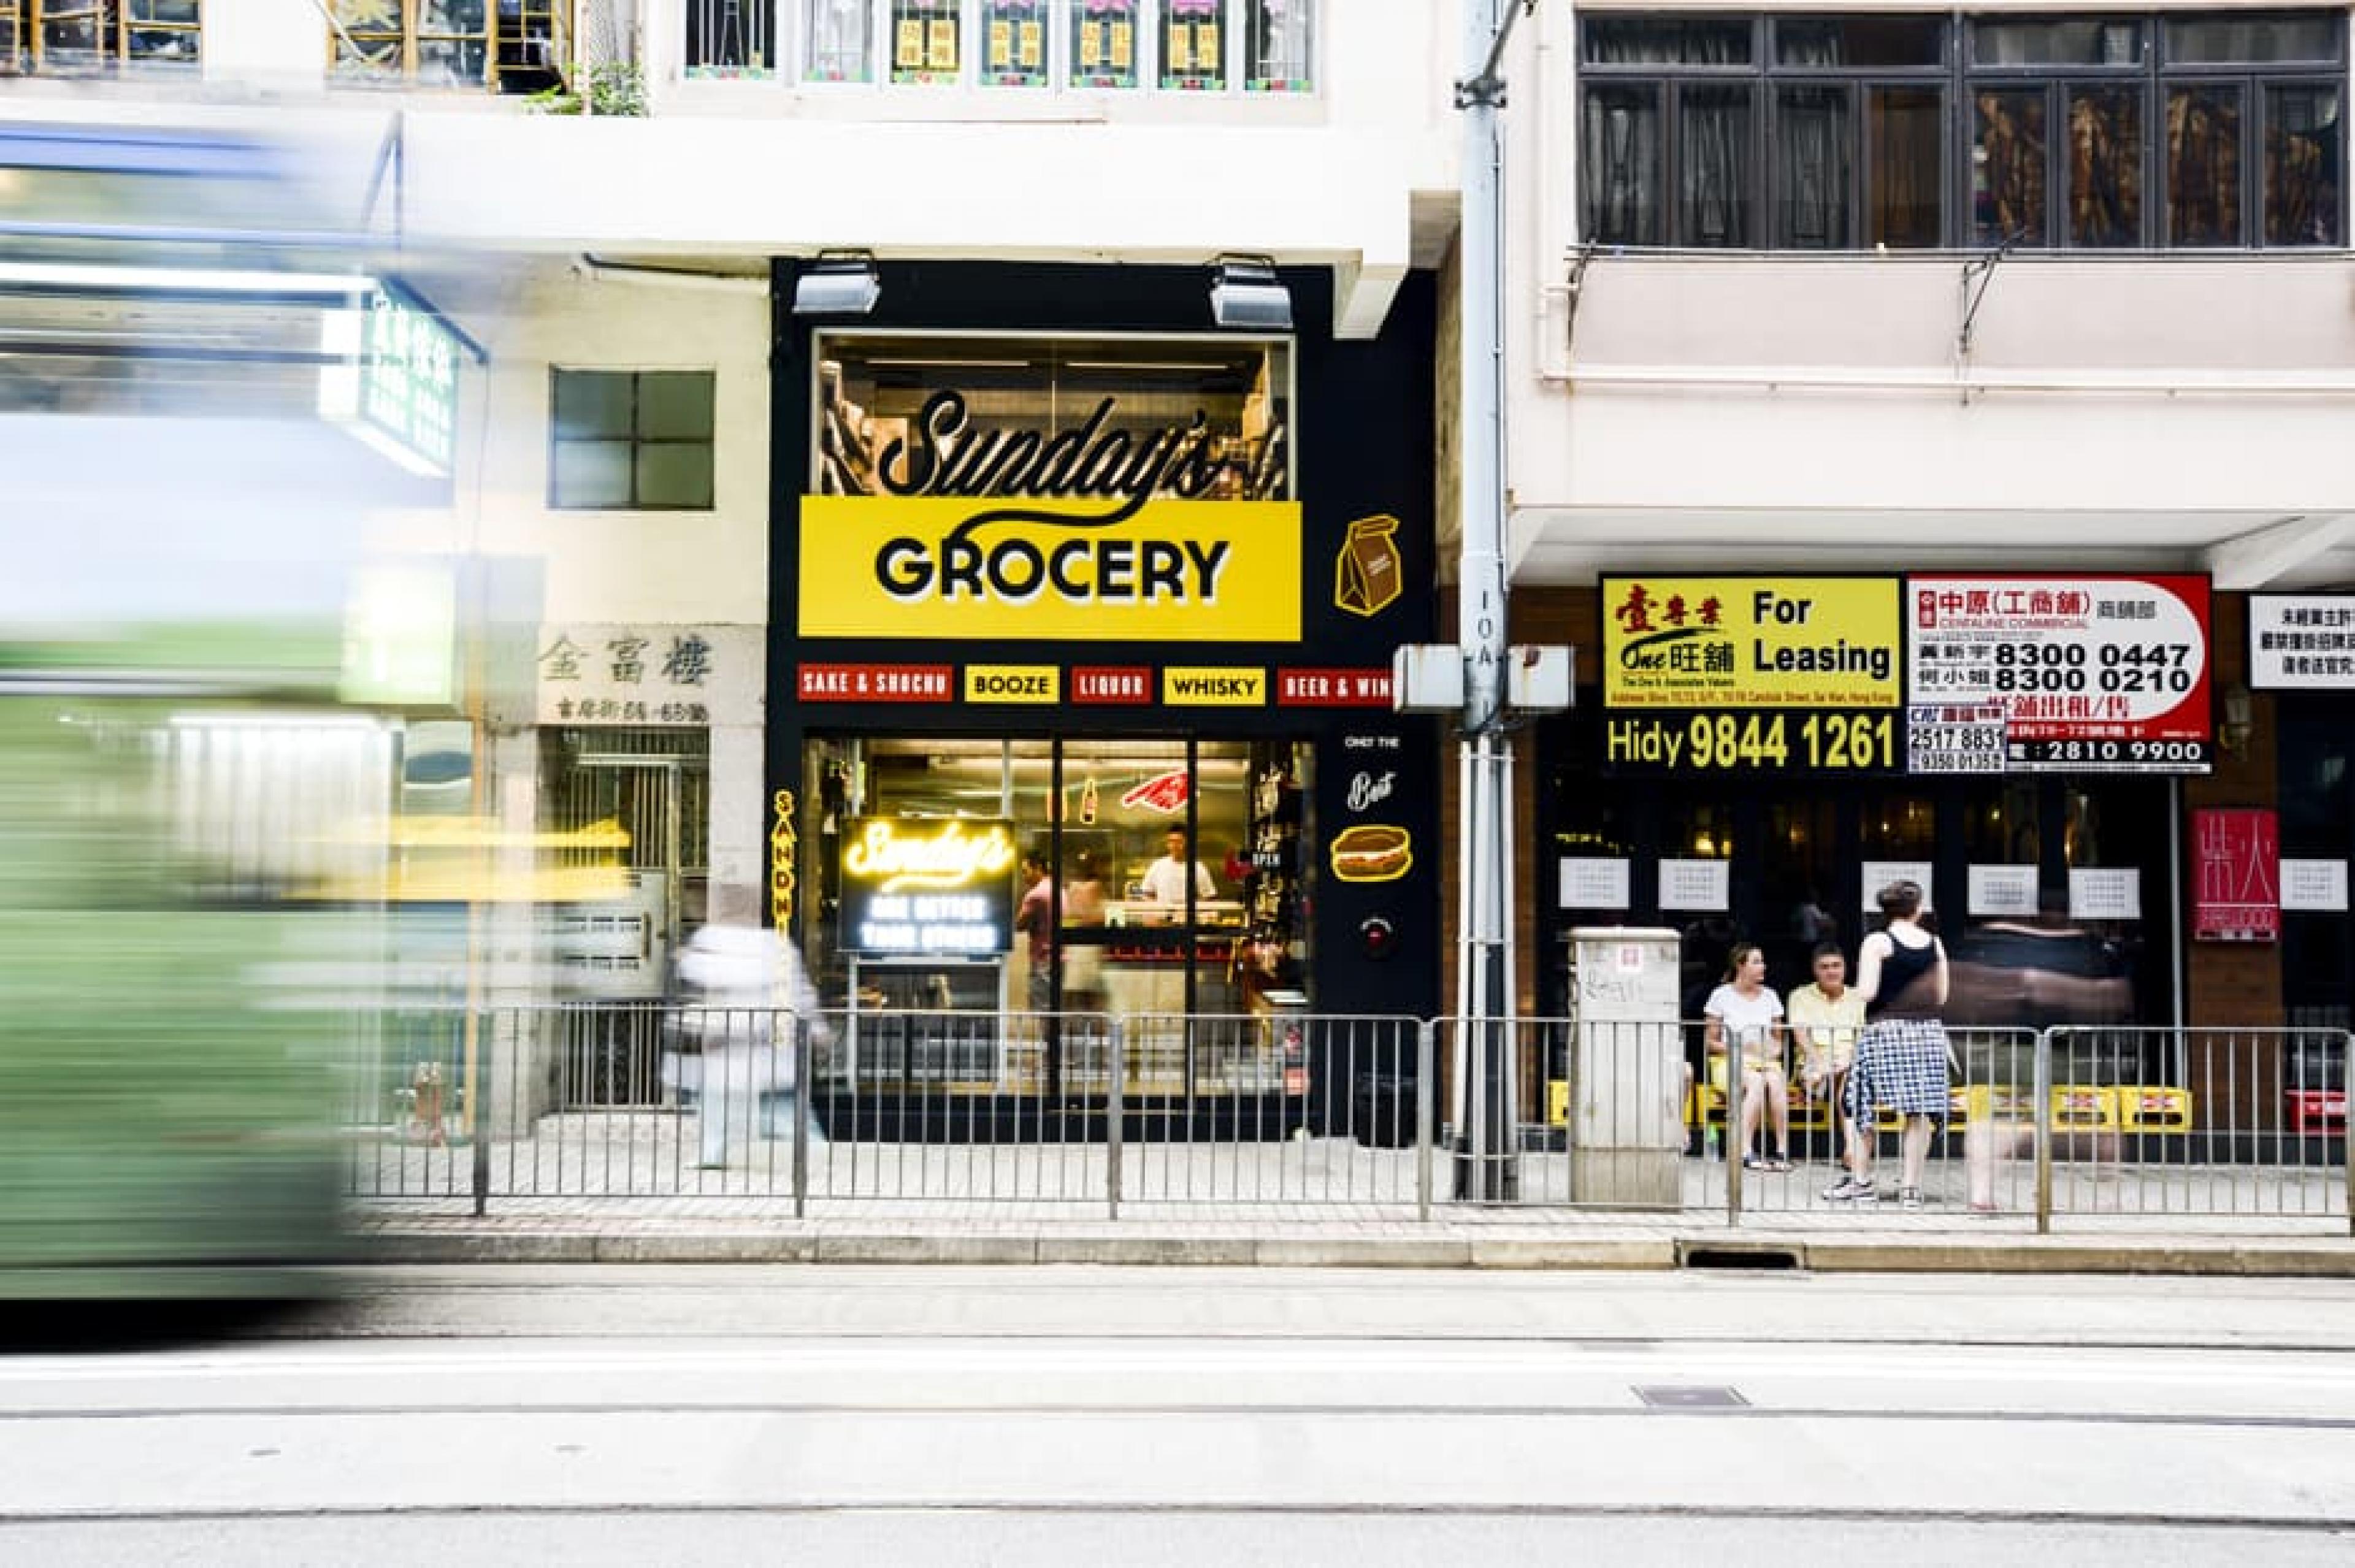 Exterior View - Sunday’s Grocery by Yardbird, Hong Kong, China - Courtesy Jason Michael Lang